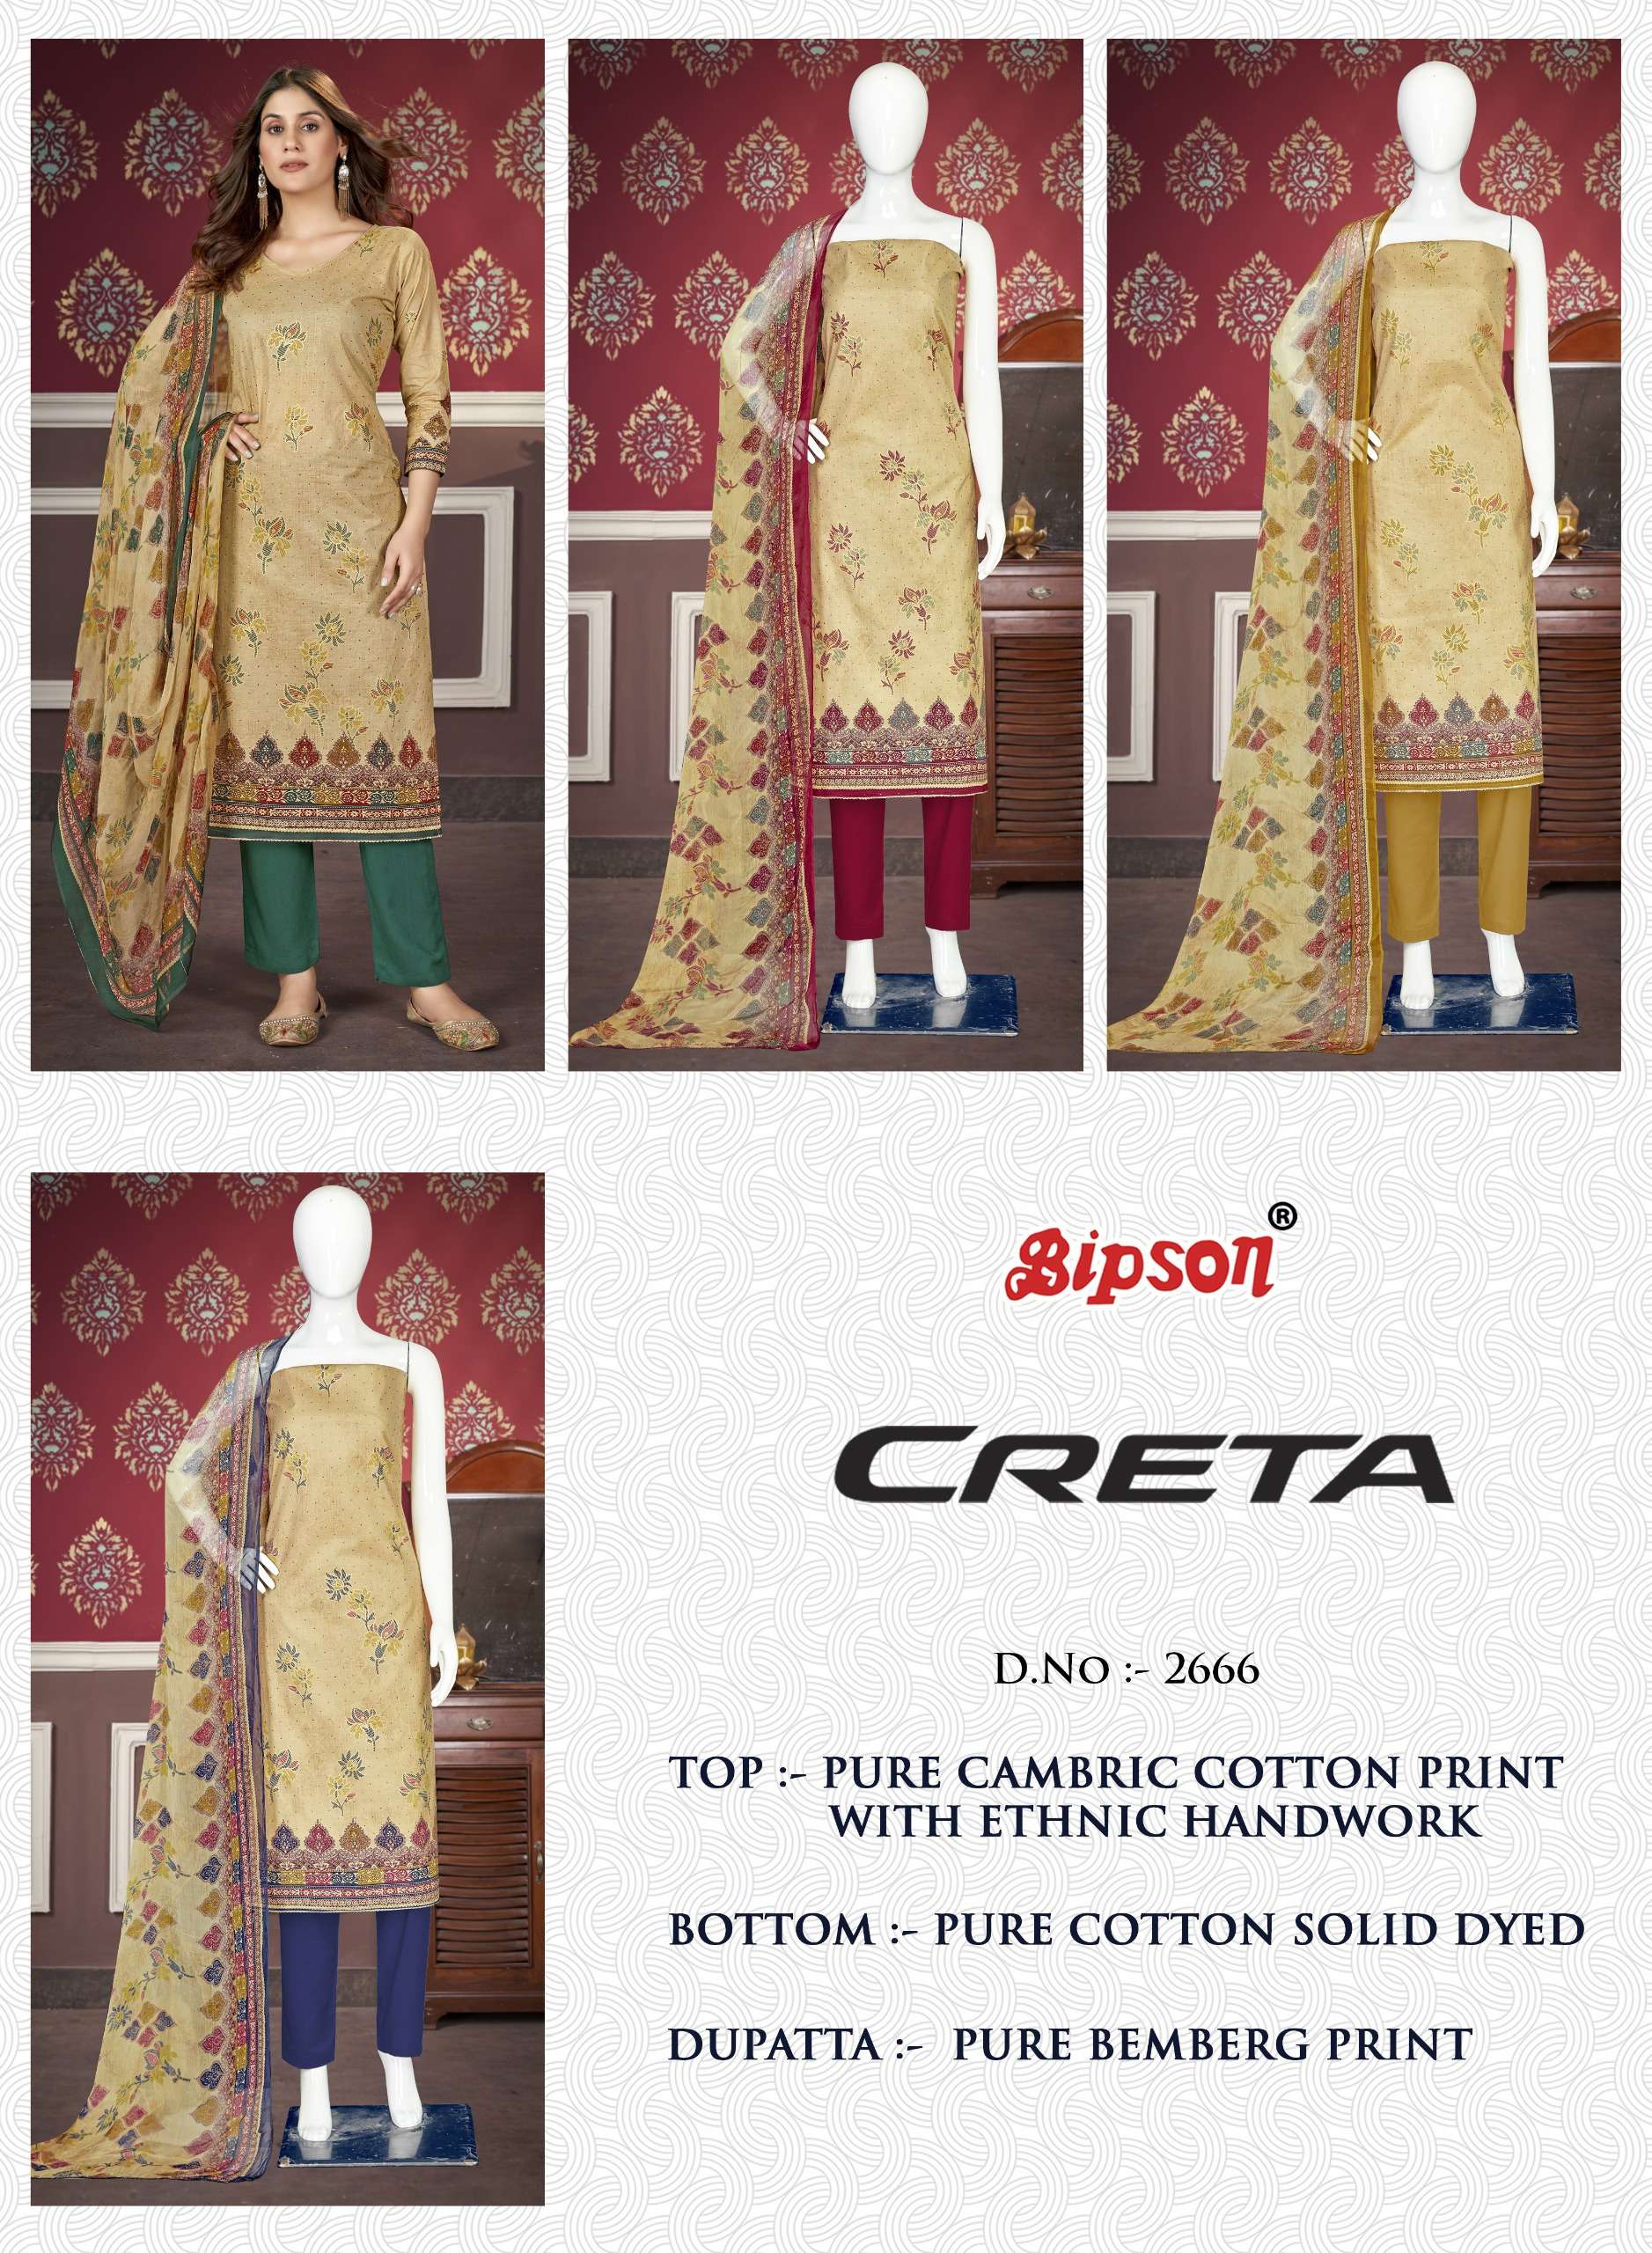 bipson creta 2666 camric cotton catchy look salwar suit catalog